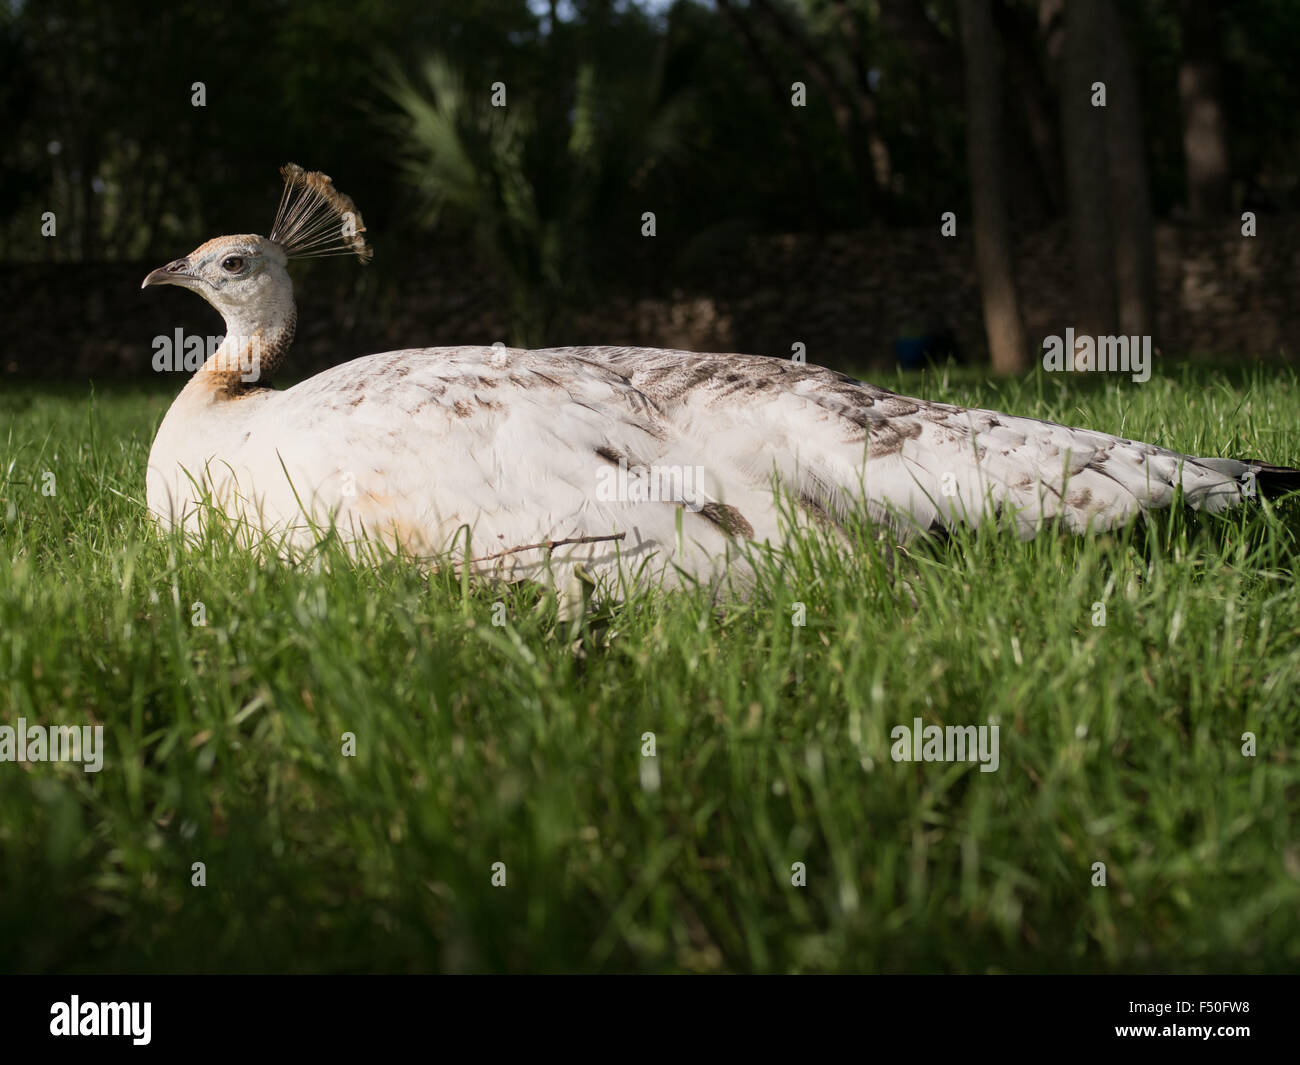 An albino peacock / peafowl sitting on the grass Stock Photo